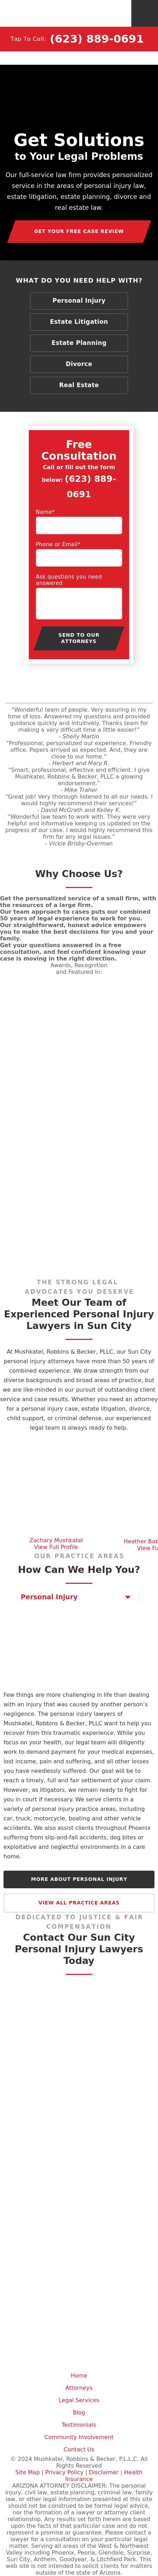 Mushkatel, Robbins & Becker, PLLC - Sun City AZ Lawyers